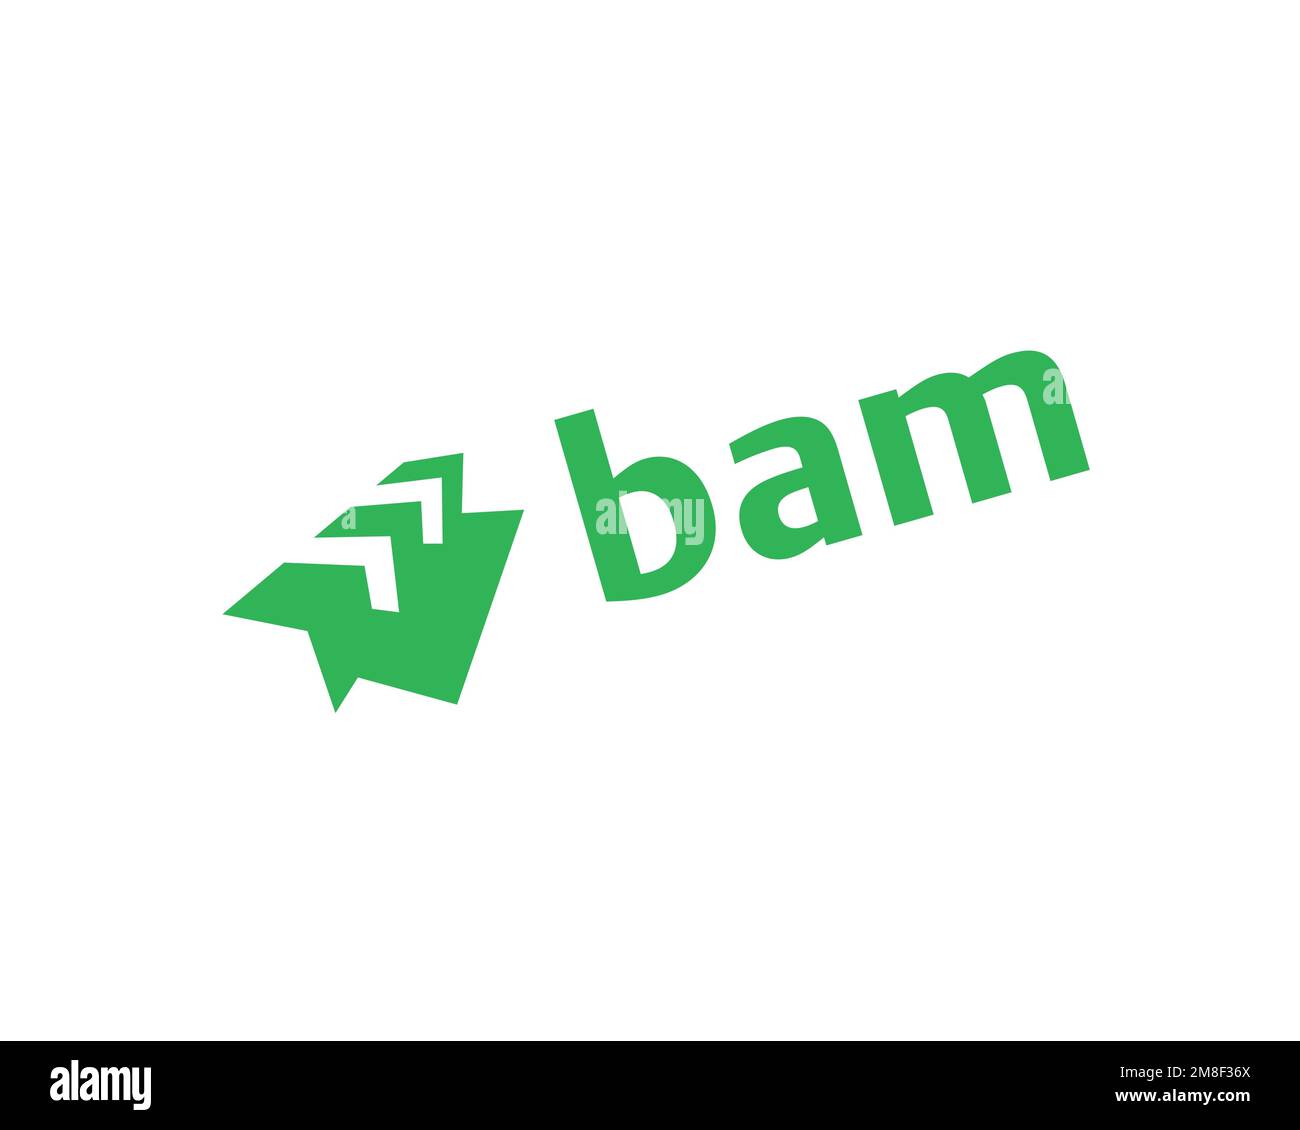 Royal BAM Group, logo ruotato, sfondo bianco Foto Stock